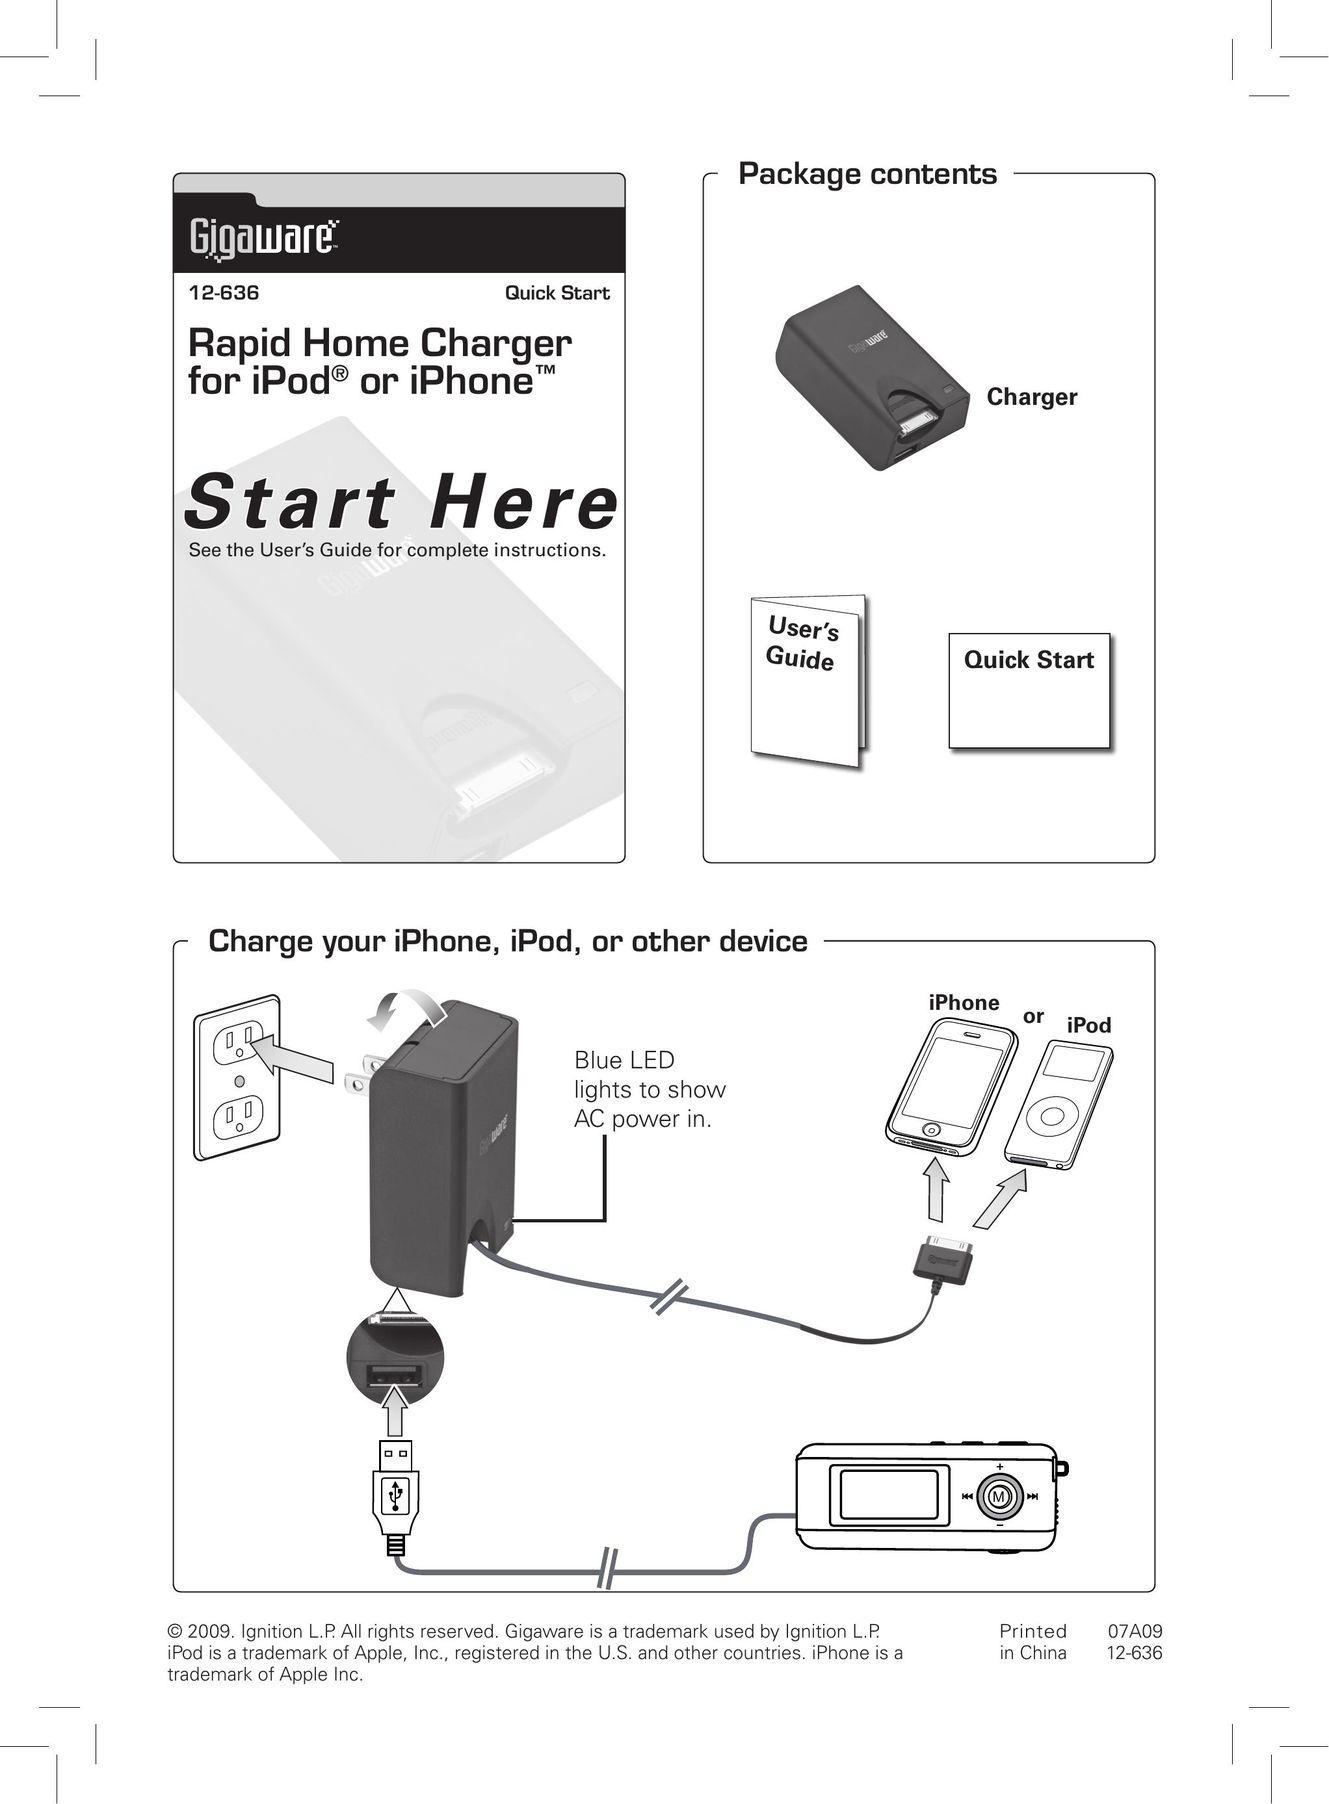 Radio Shack 12-636 MP3 Player Accessories User Manual